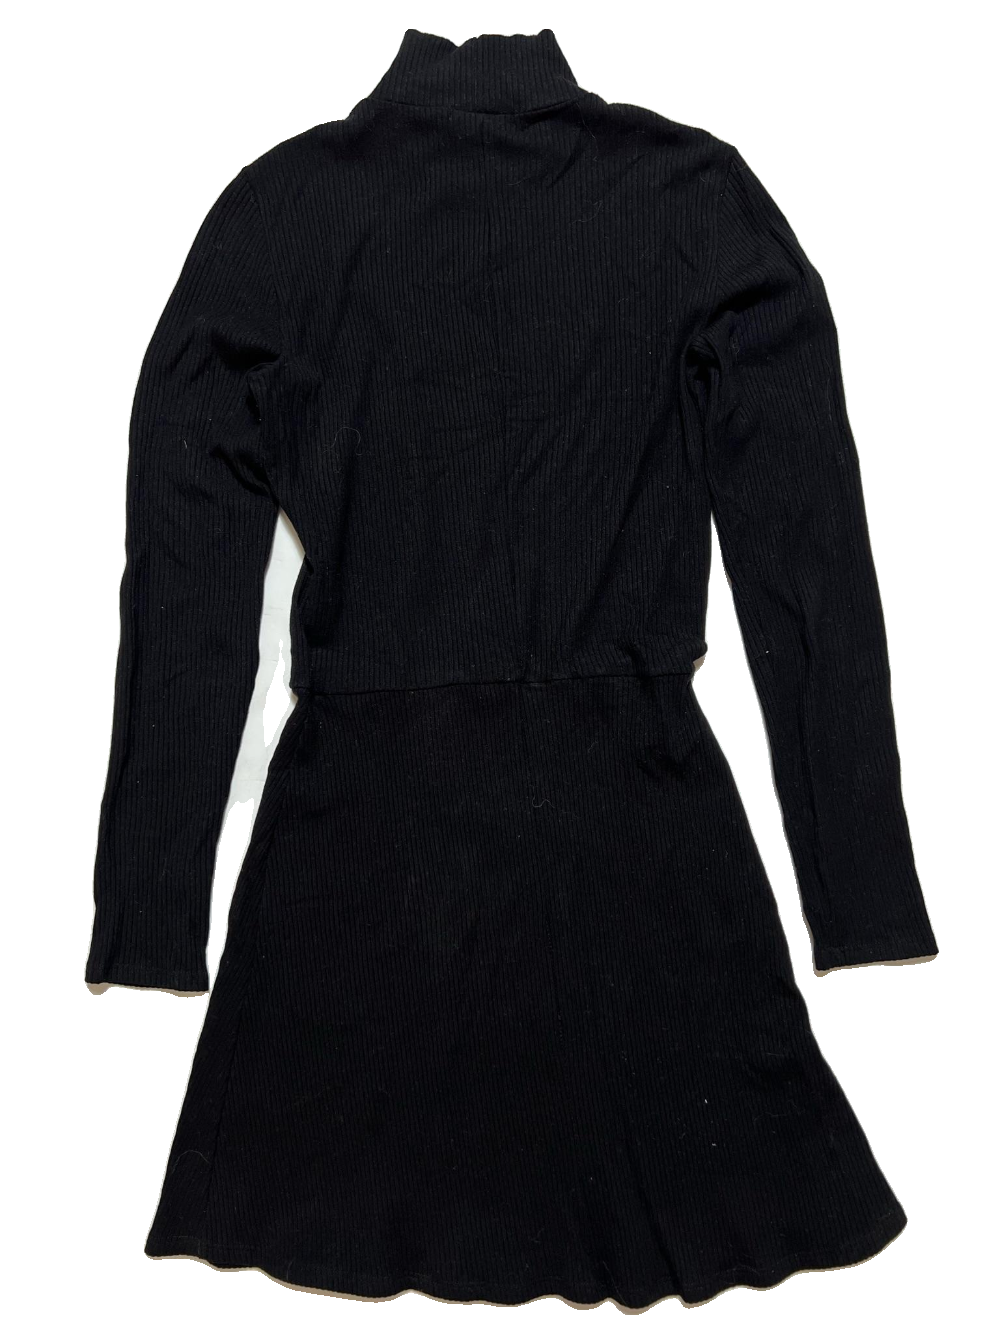 Reformation- Black Long Sleeve Mini Dress